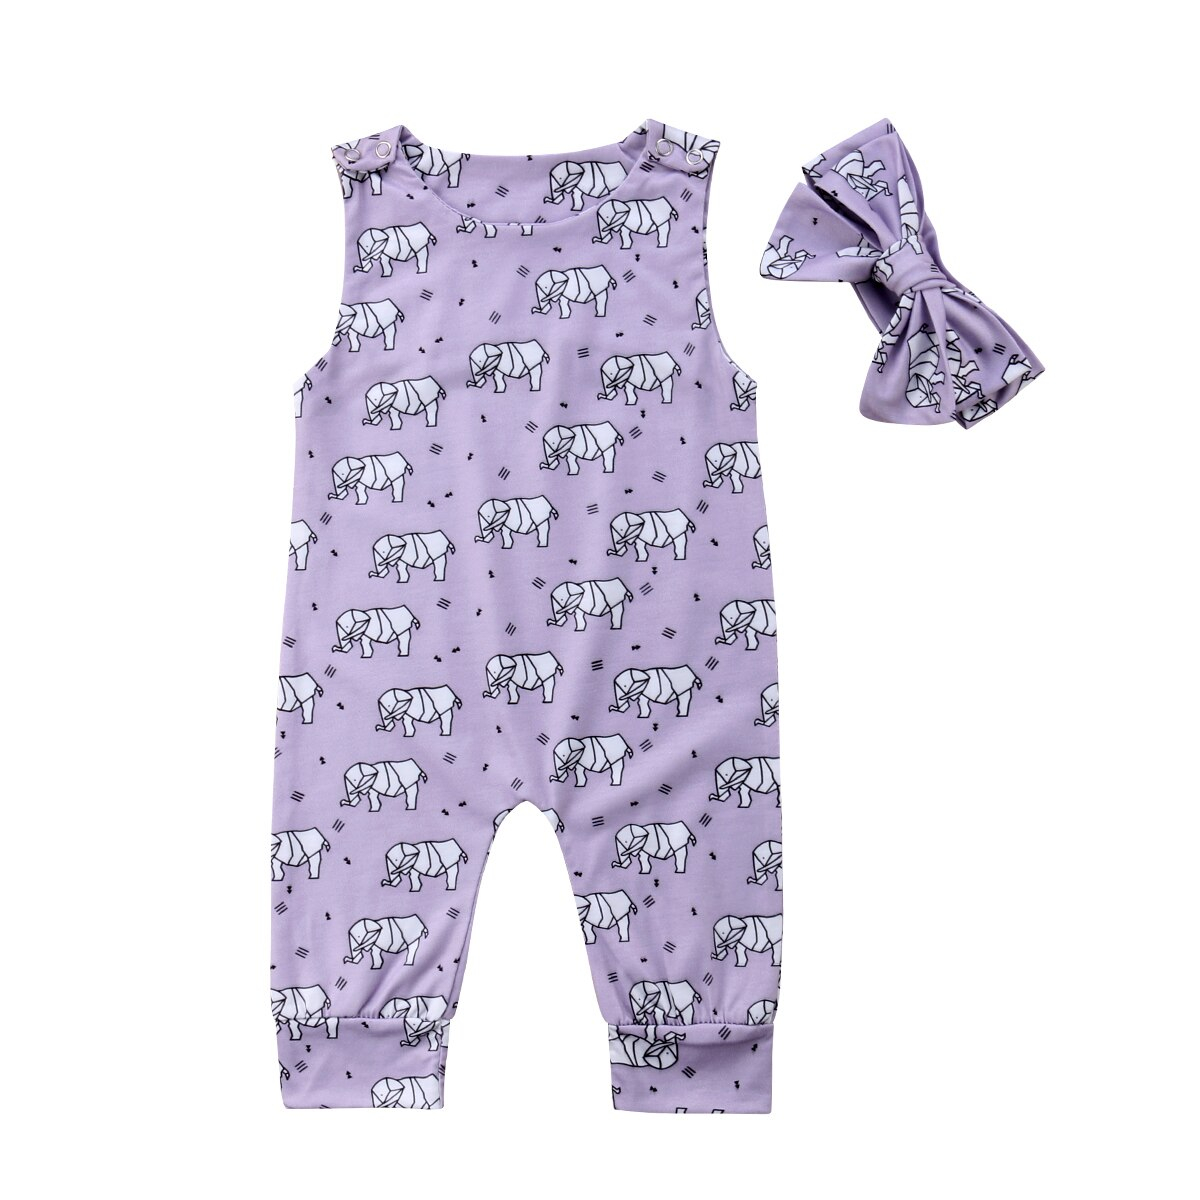 Origami Elephant For Kids Toddler Ba Girl Purple Origami Elephant Print Romper Jumpsuit